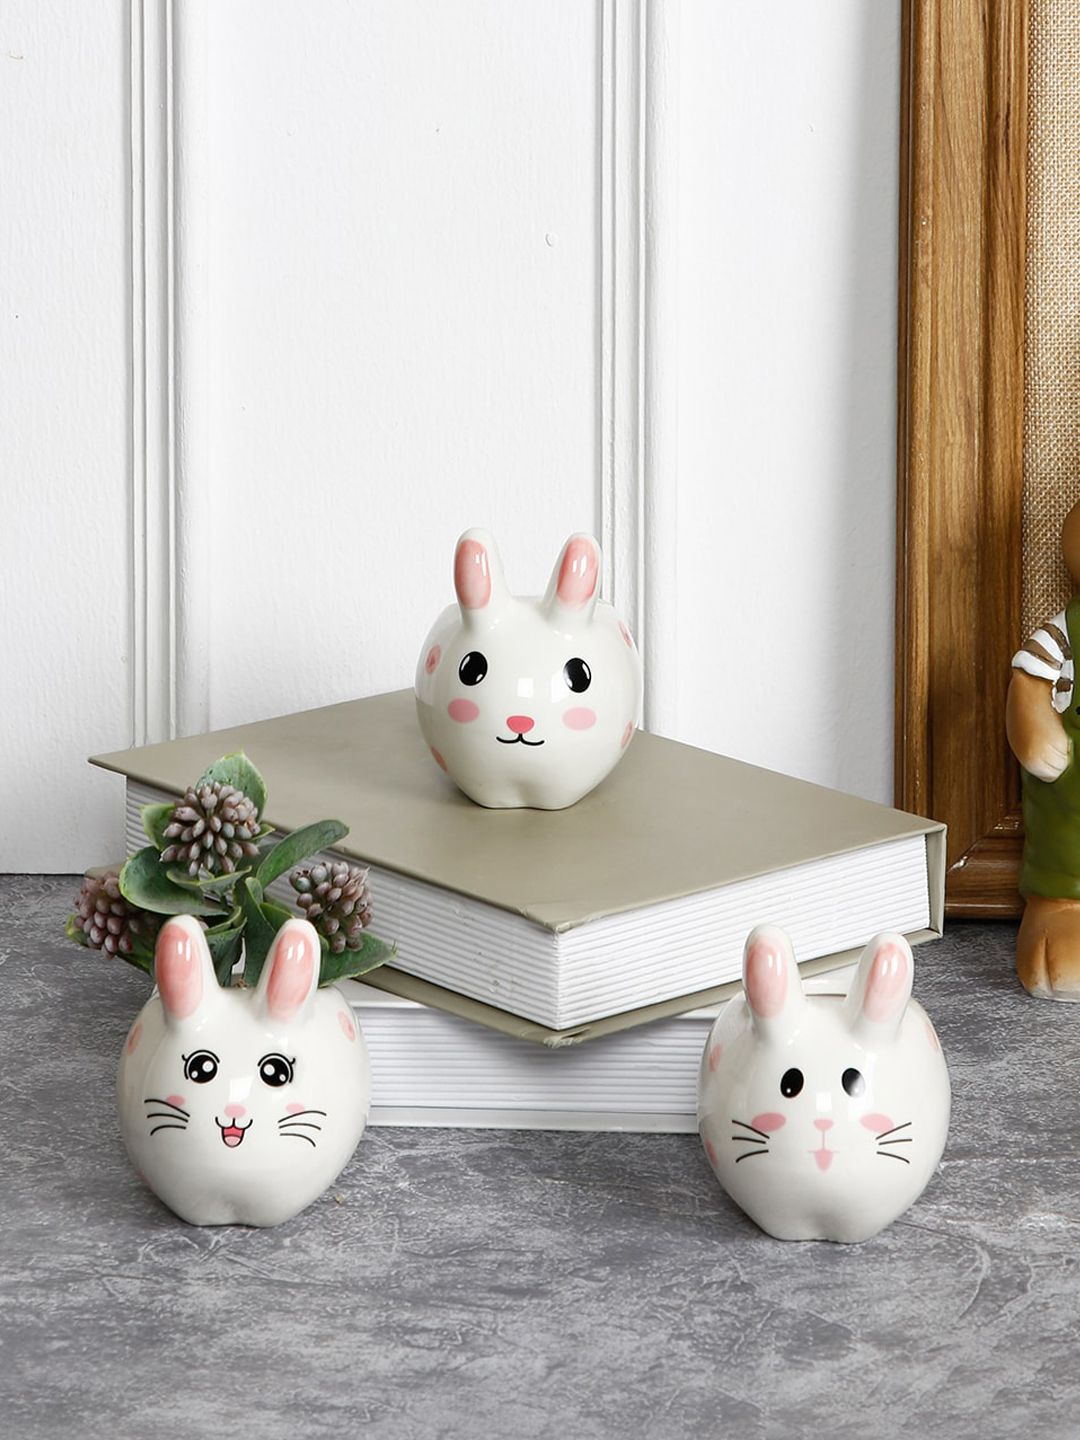 Aapno Rajasthan Set Of 3 Rabbit Face Ceramic Planters Price in India